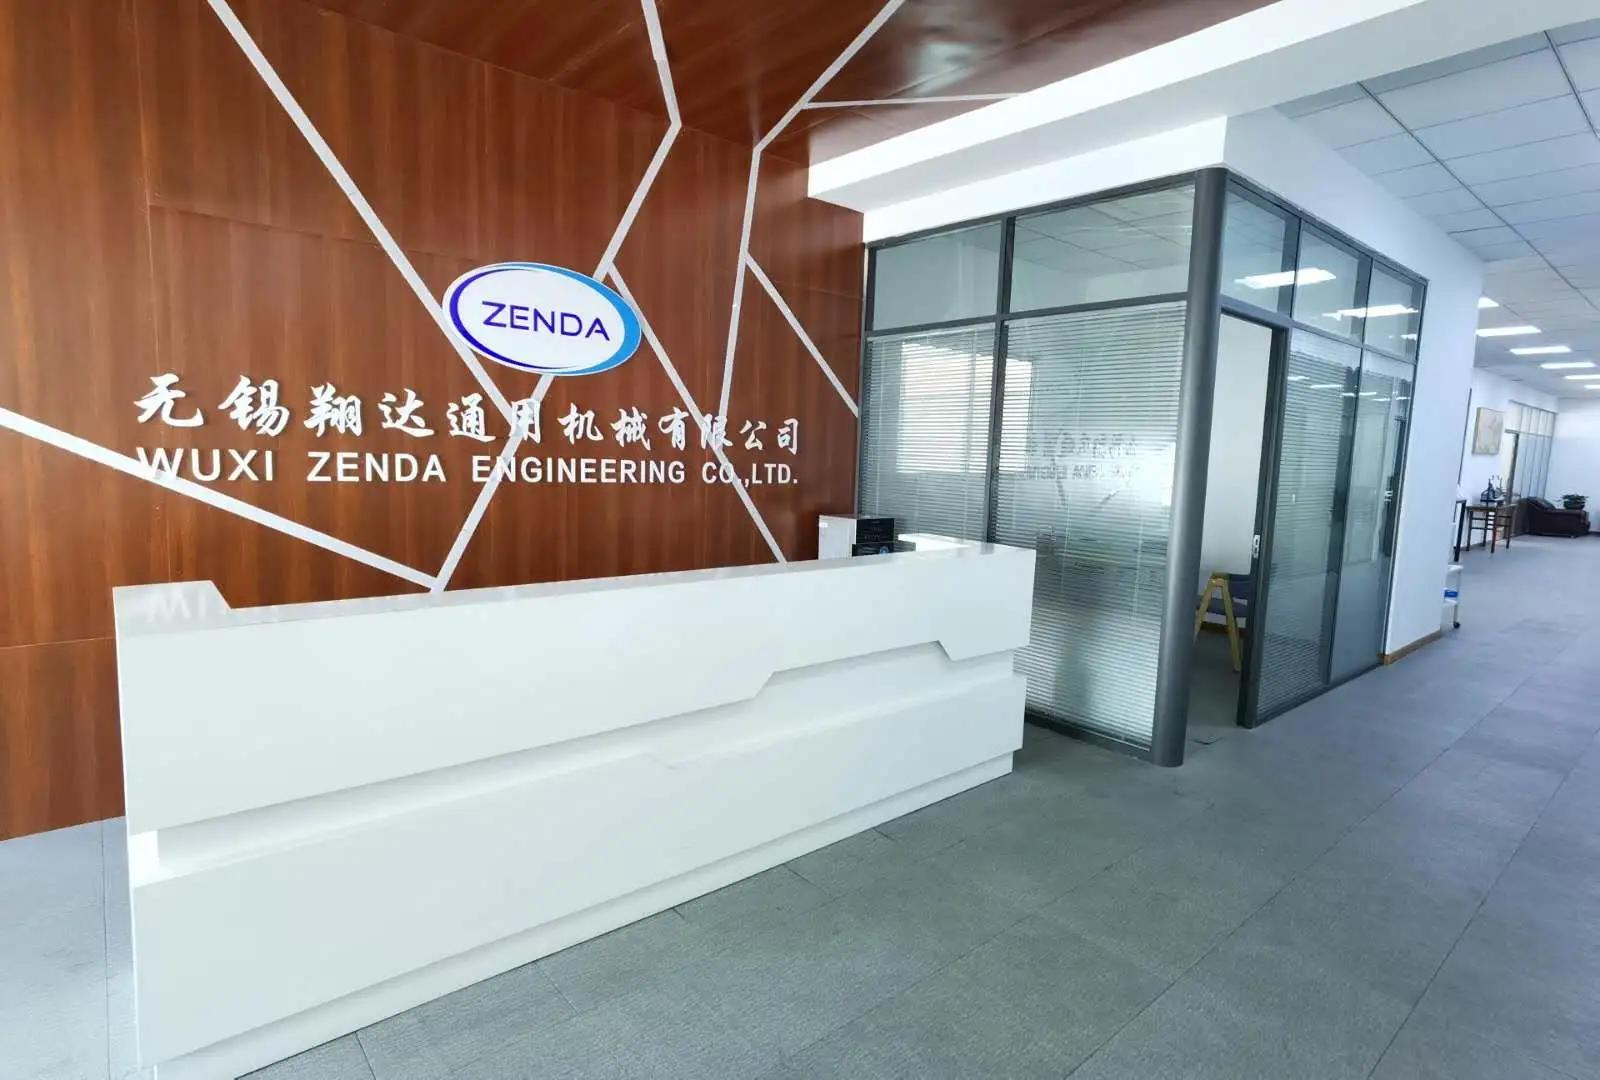 Wuxi Zenda Engineering Co., Ltd.